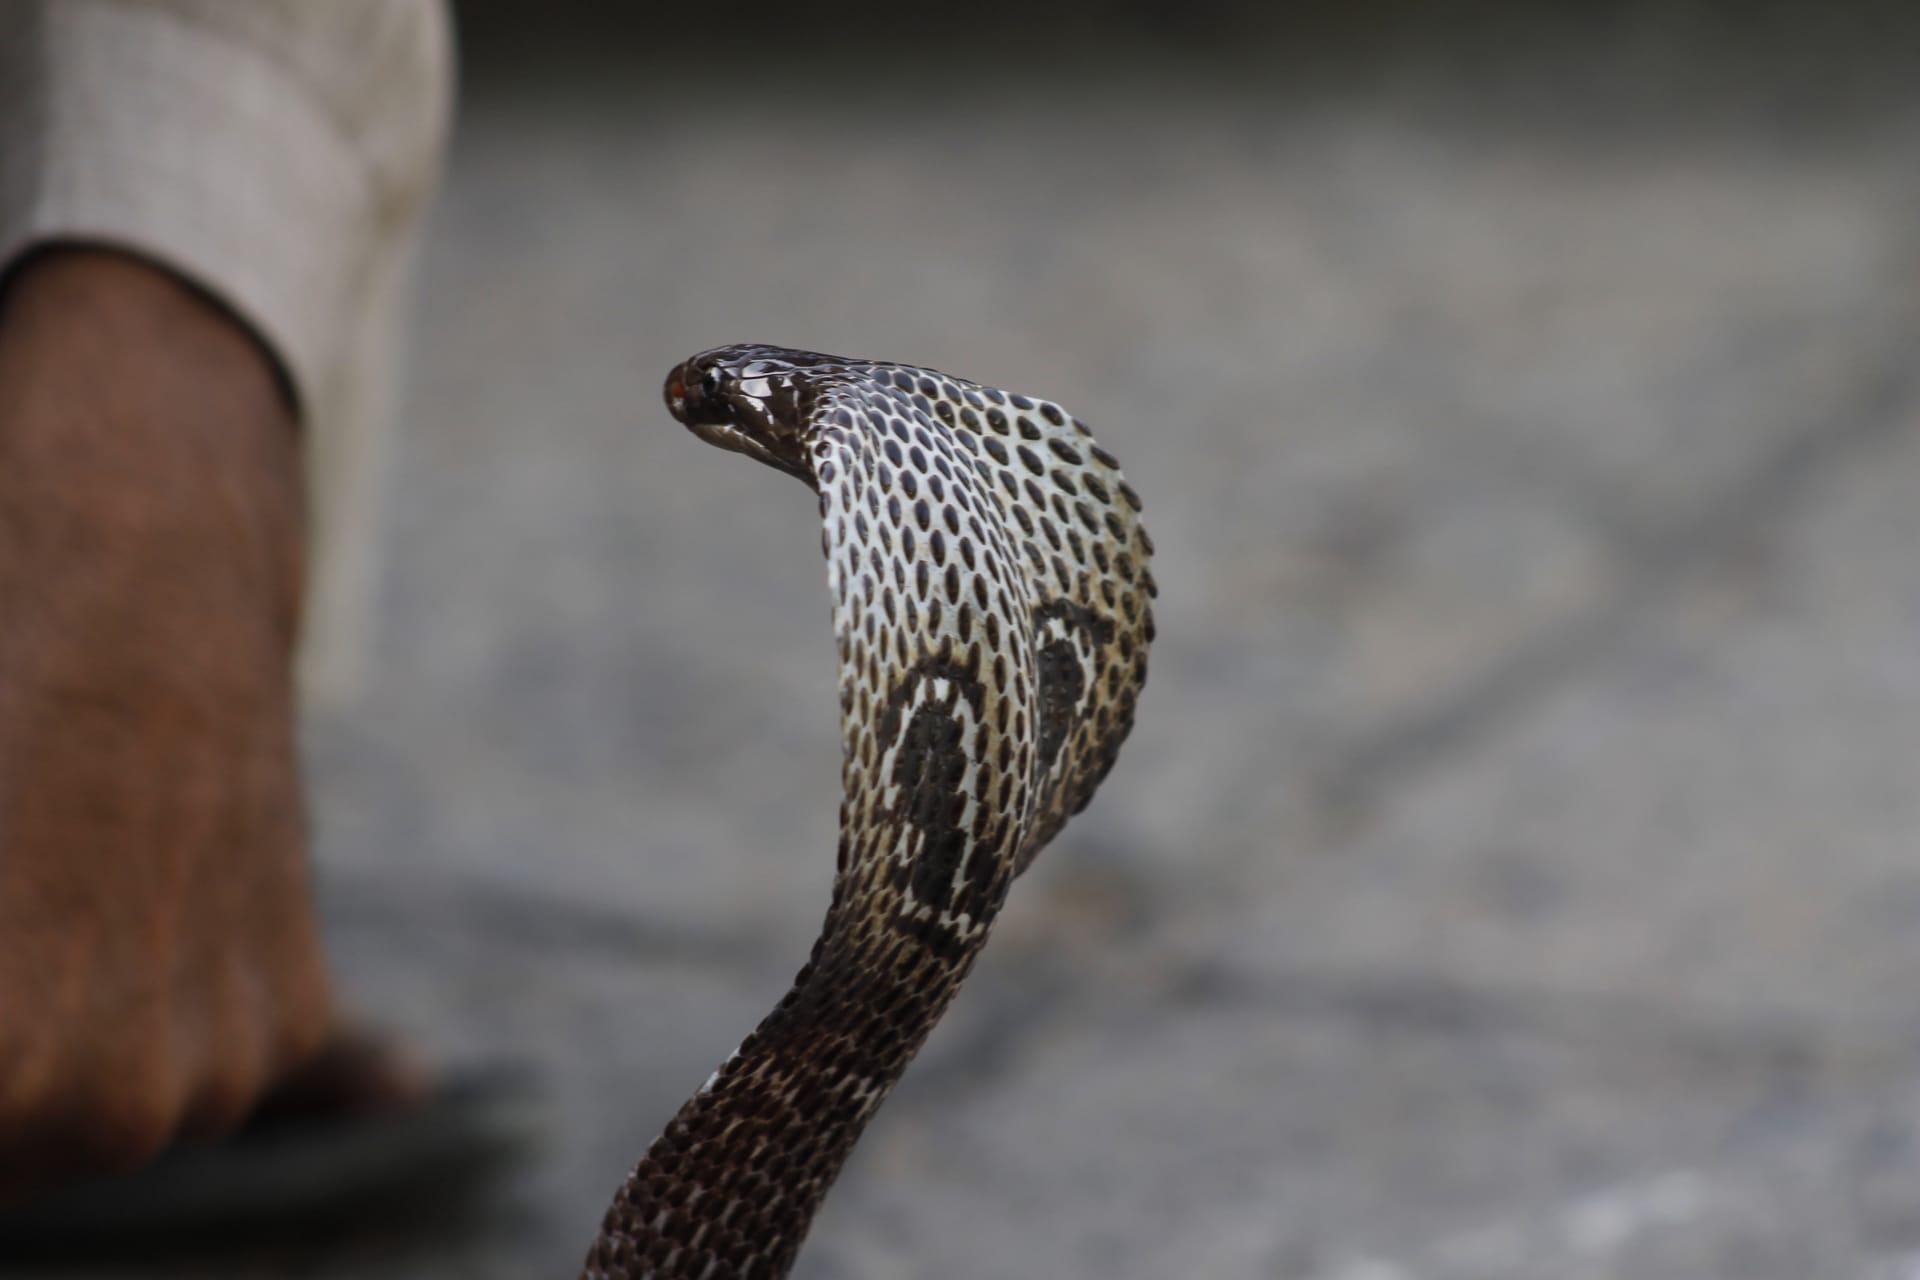 Cobra snake pictures